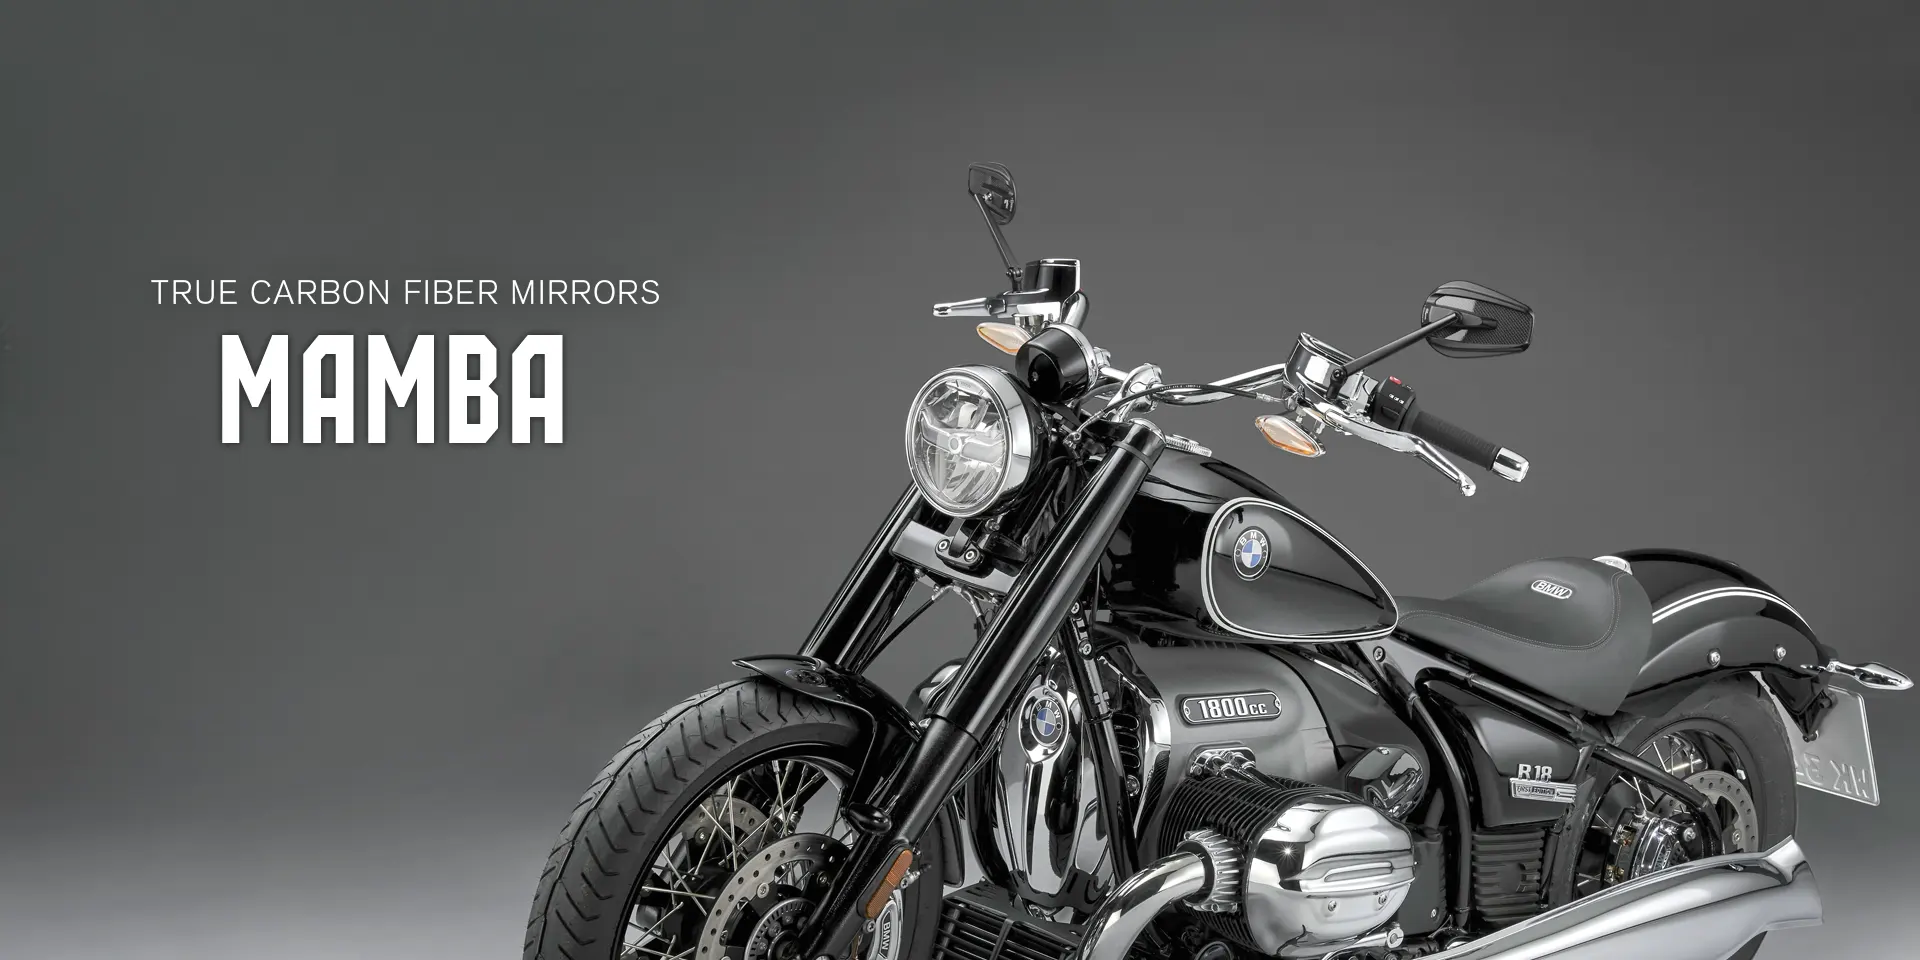 True carbon fiber mirrros - Mamba, on a BMW R18 motorcycle